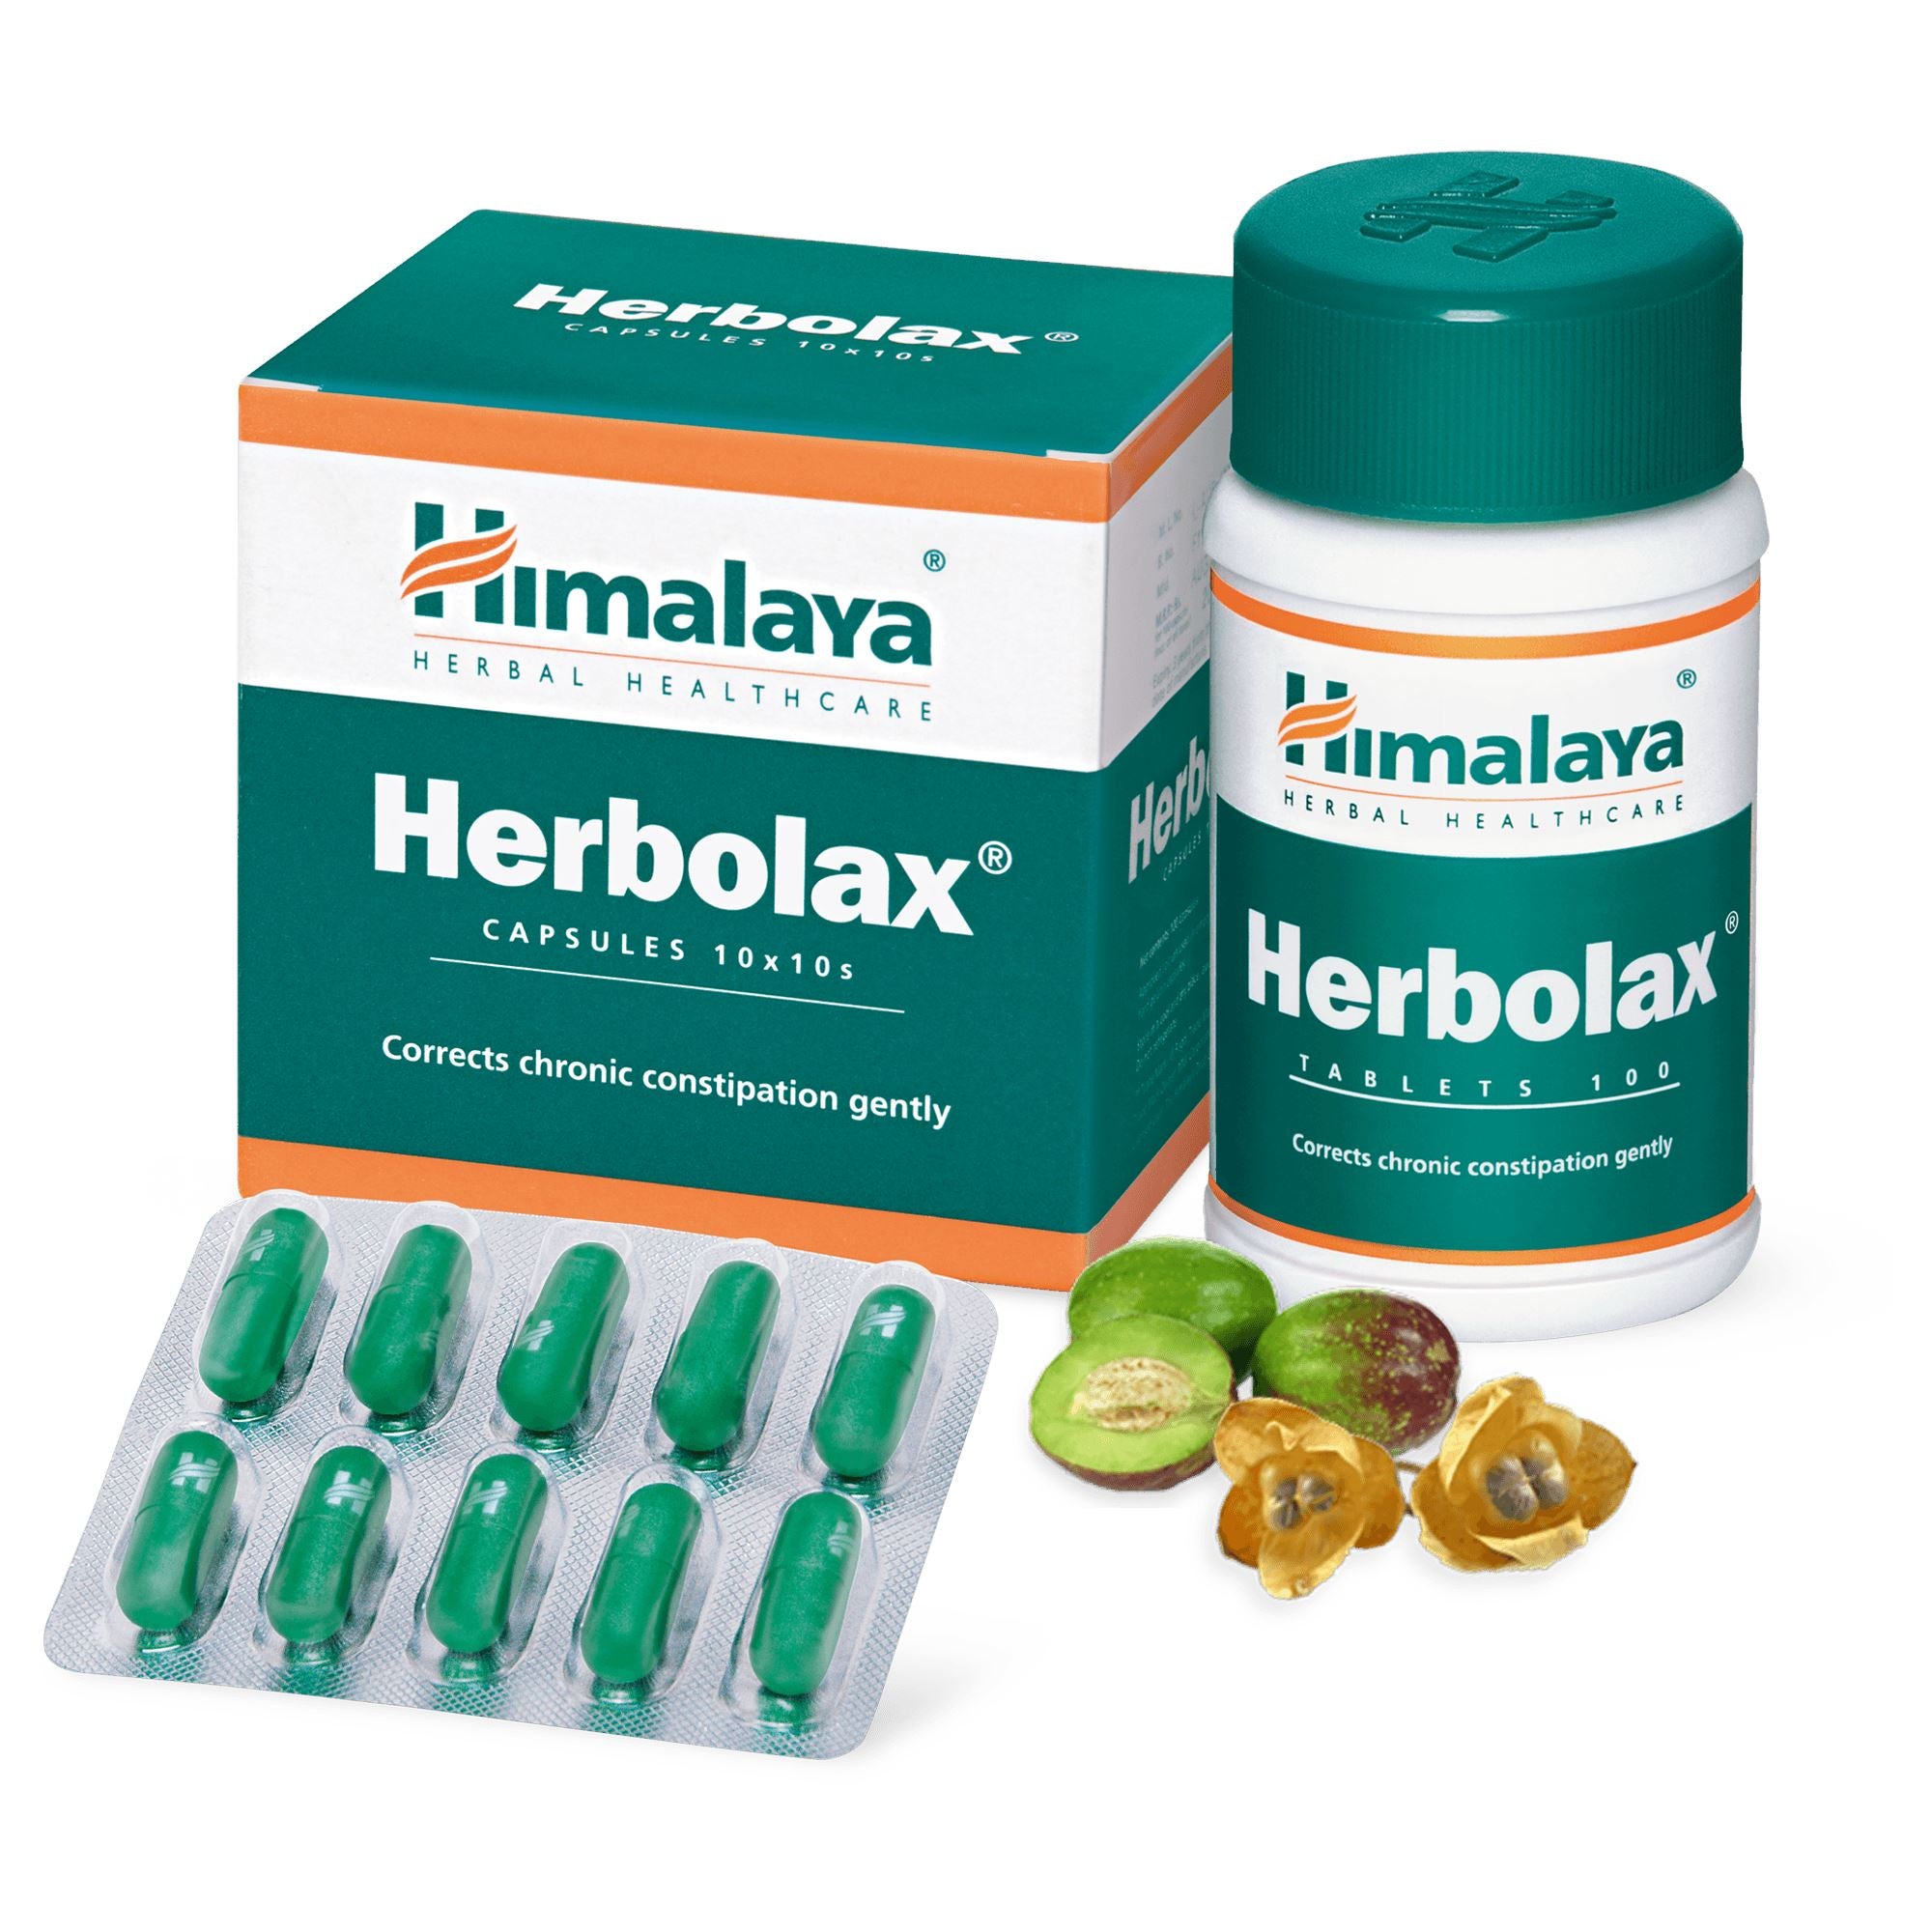 Himalaya Herbolax - The gentle bowel regulator